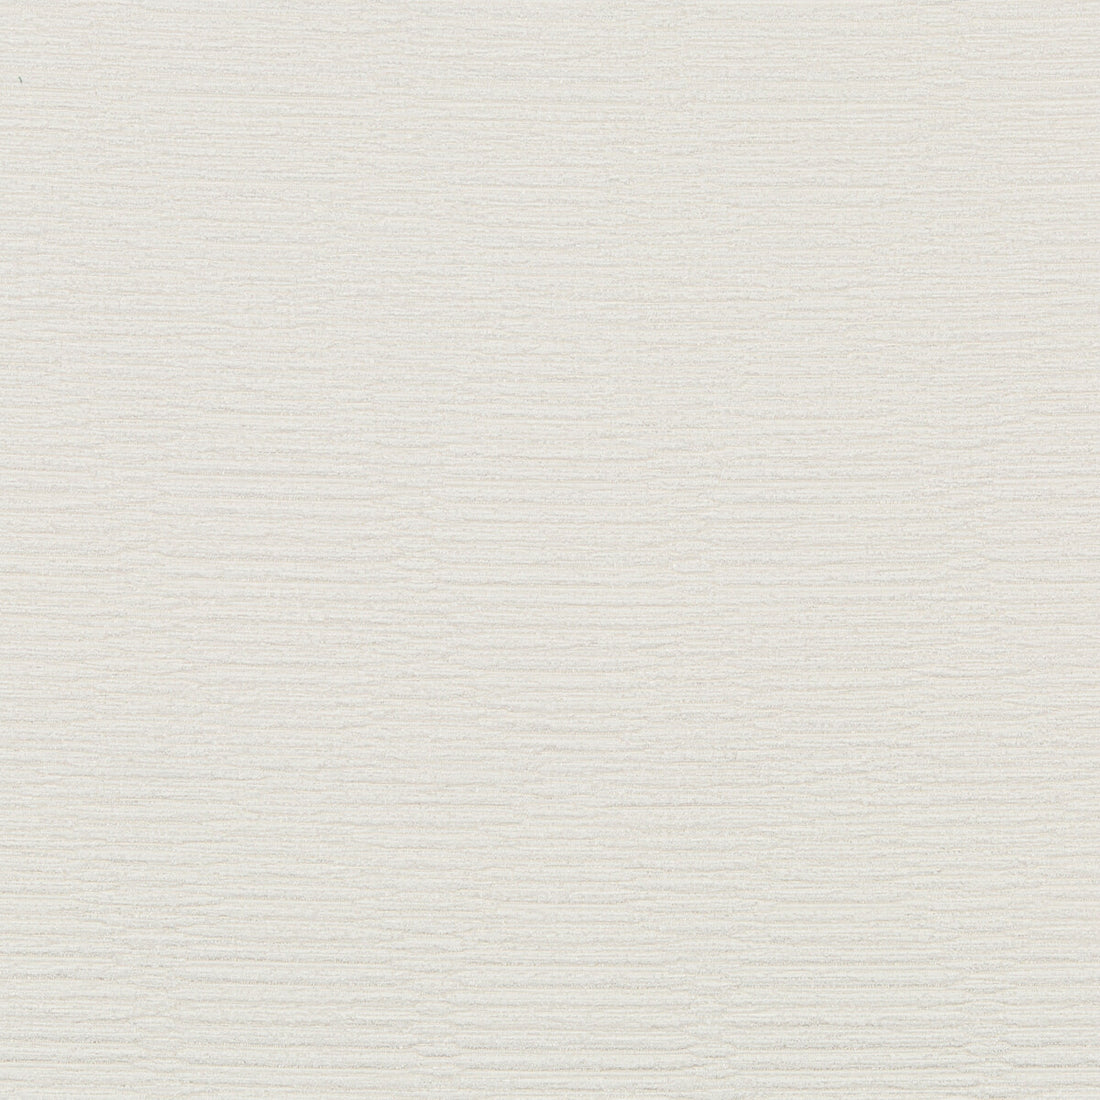 Kravet Smart fabric in 35954-101 color - pattern 35954.101.0 - by Kravet Smart in the Performance Kravetarmor collection